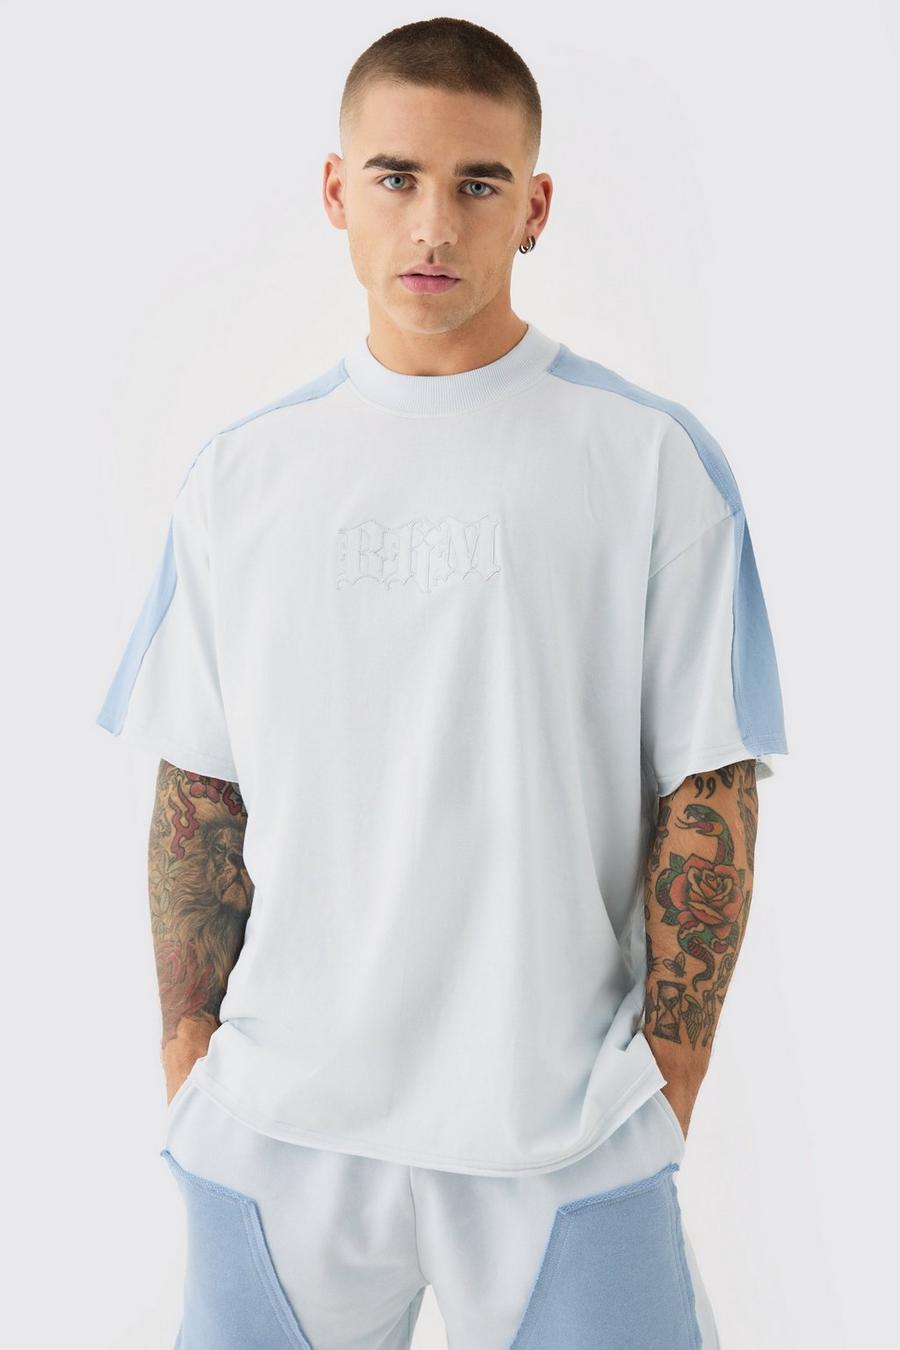 Camiseta oversize con aplique BM de letras góticas, Light blue